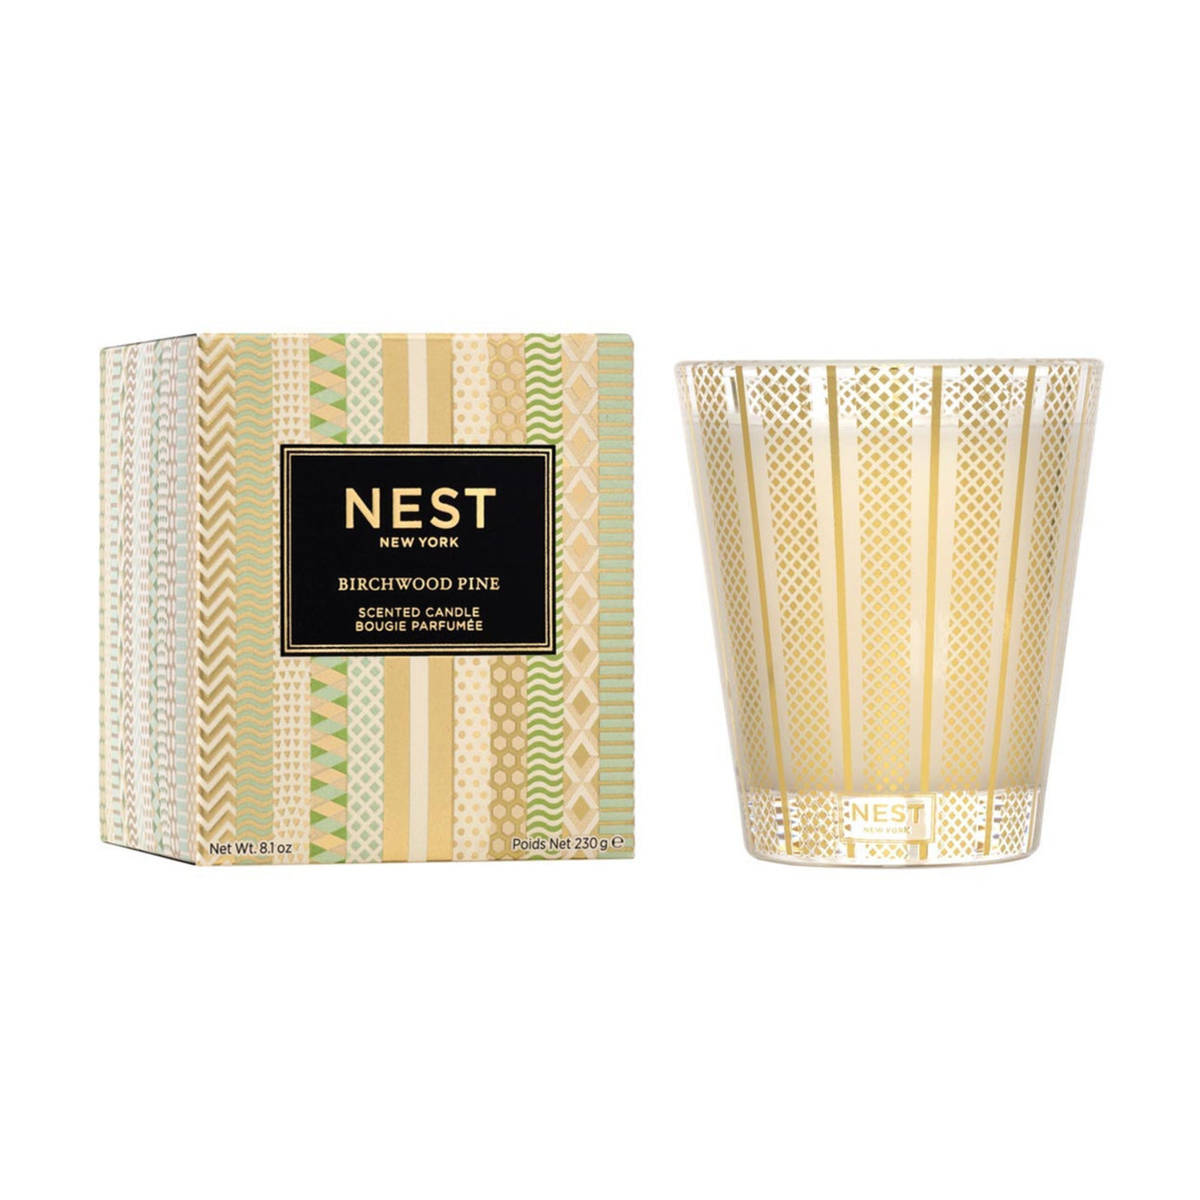 Product Image of Nest New York Birchwood Pine Classic Candle